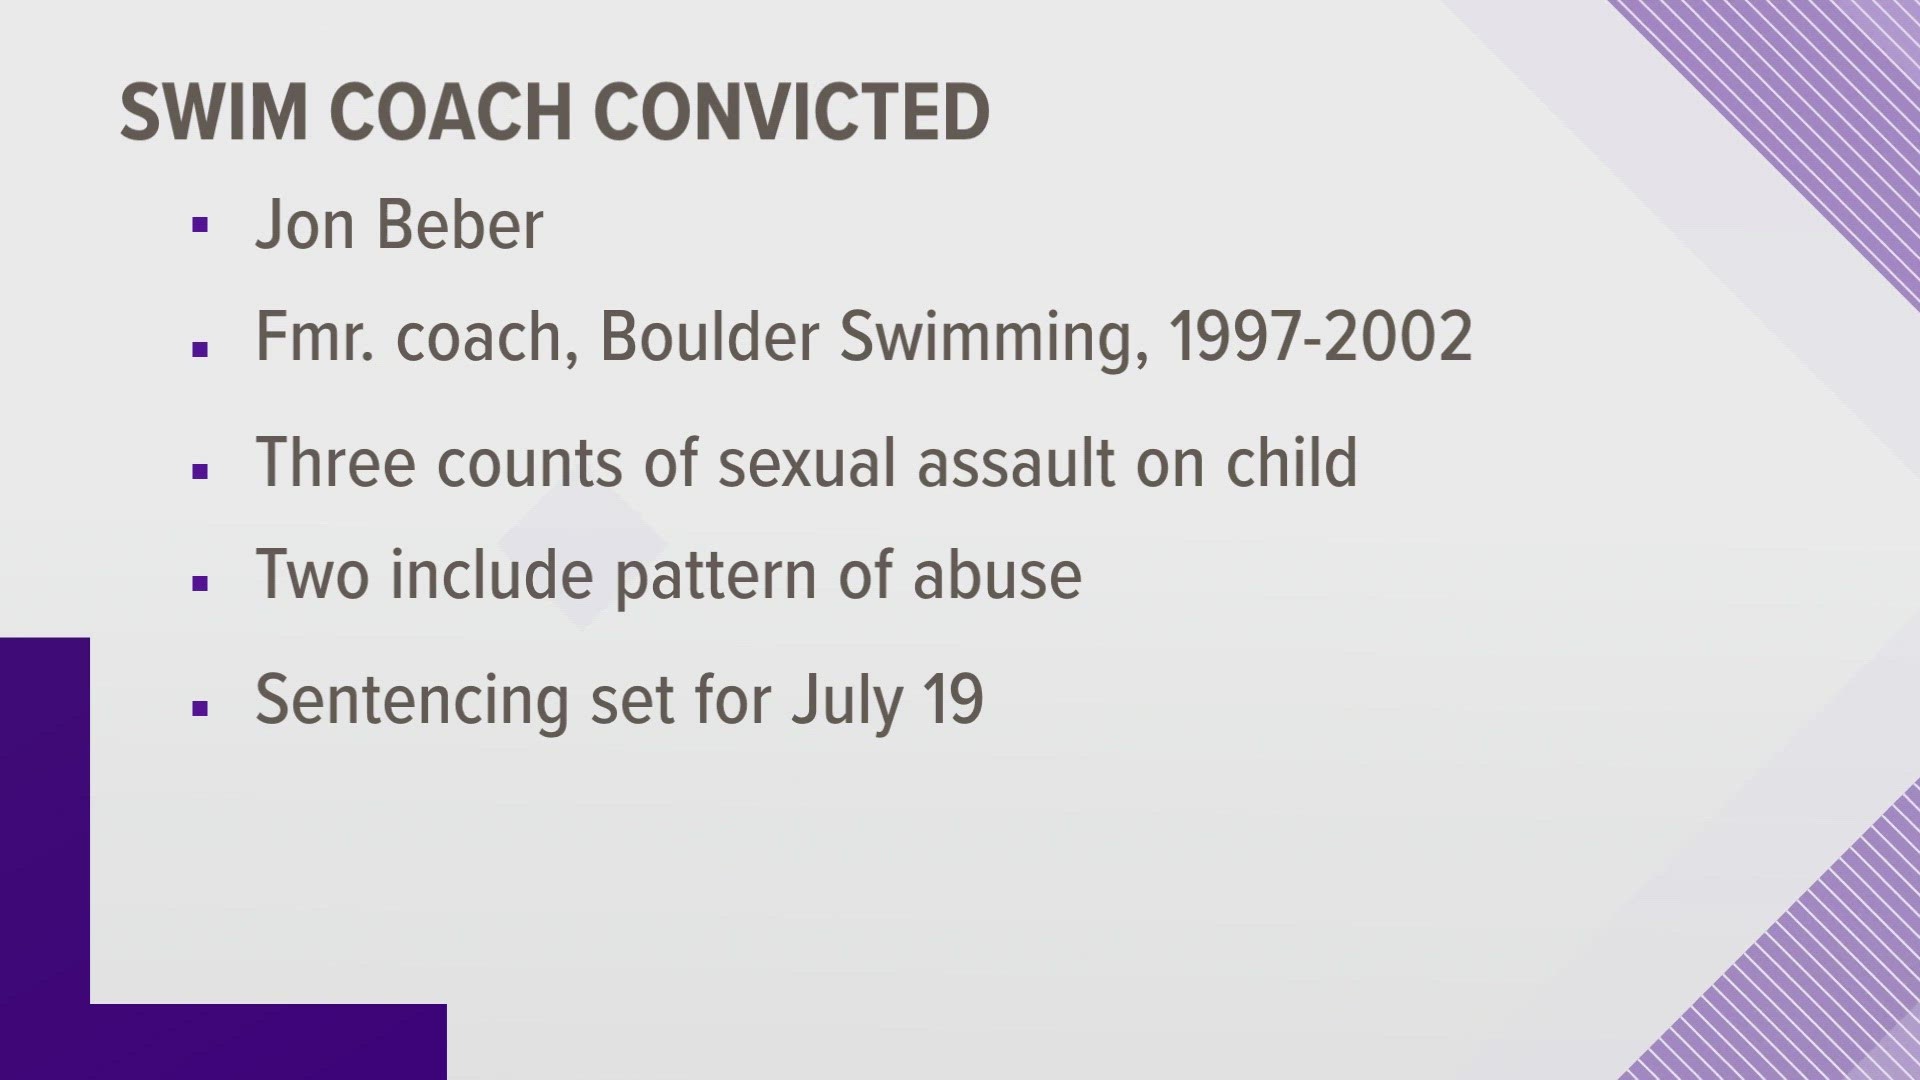 Jon Michael Beber was a swim coach for a Boulder club team from 1997 through 2002.